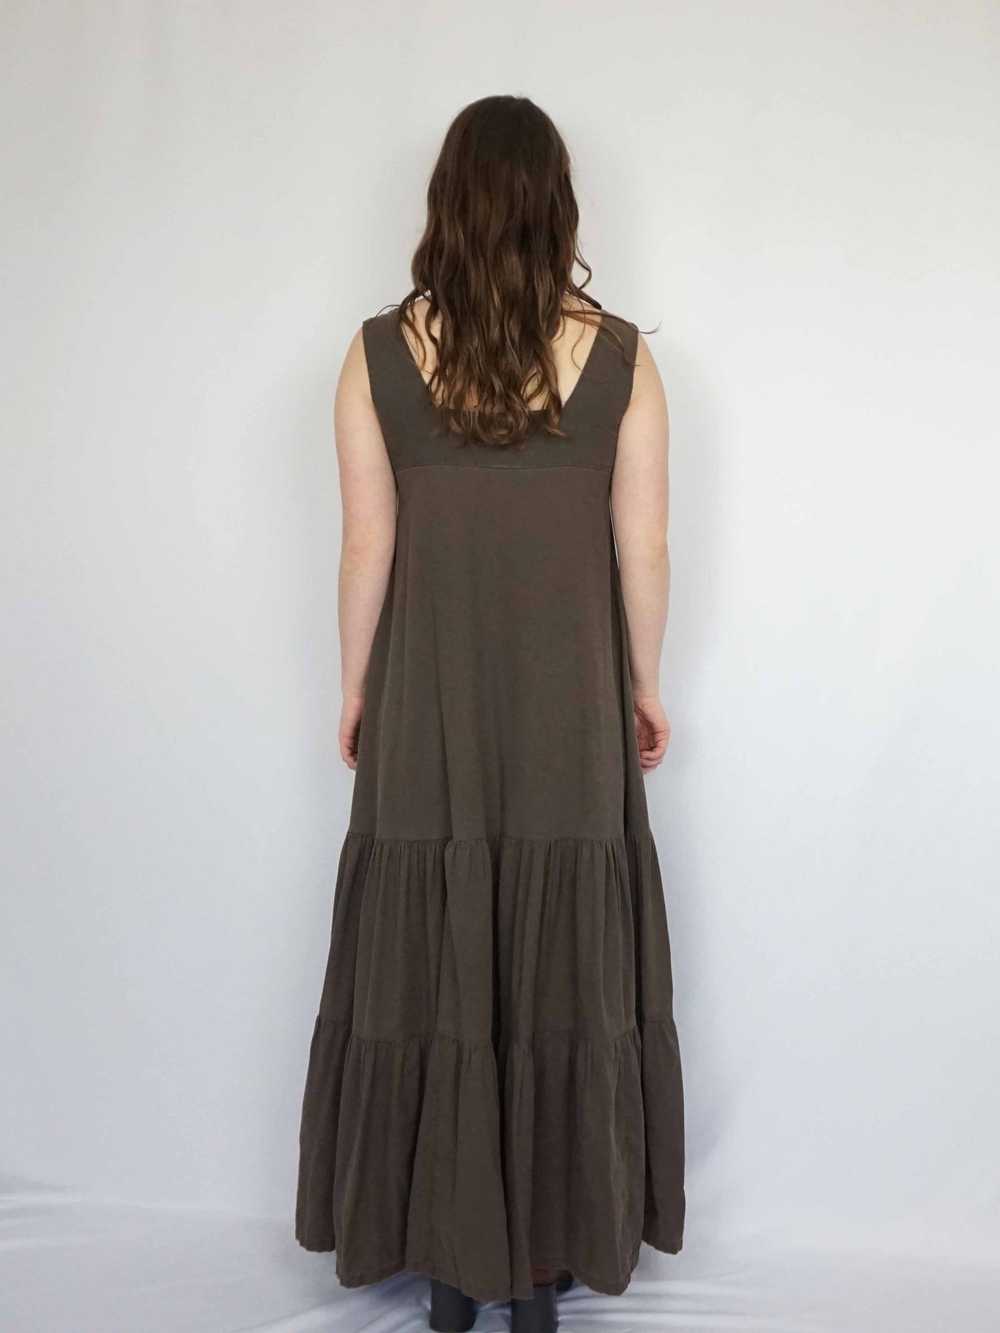 Laura Ashley Brown Pinafore Dress - S - image 2